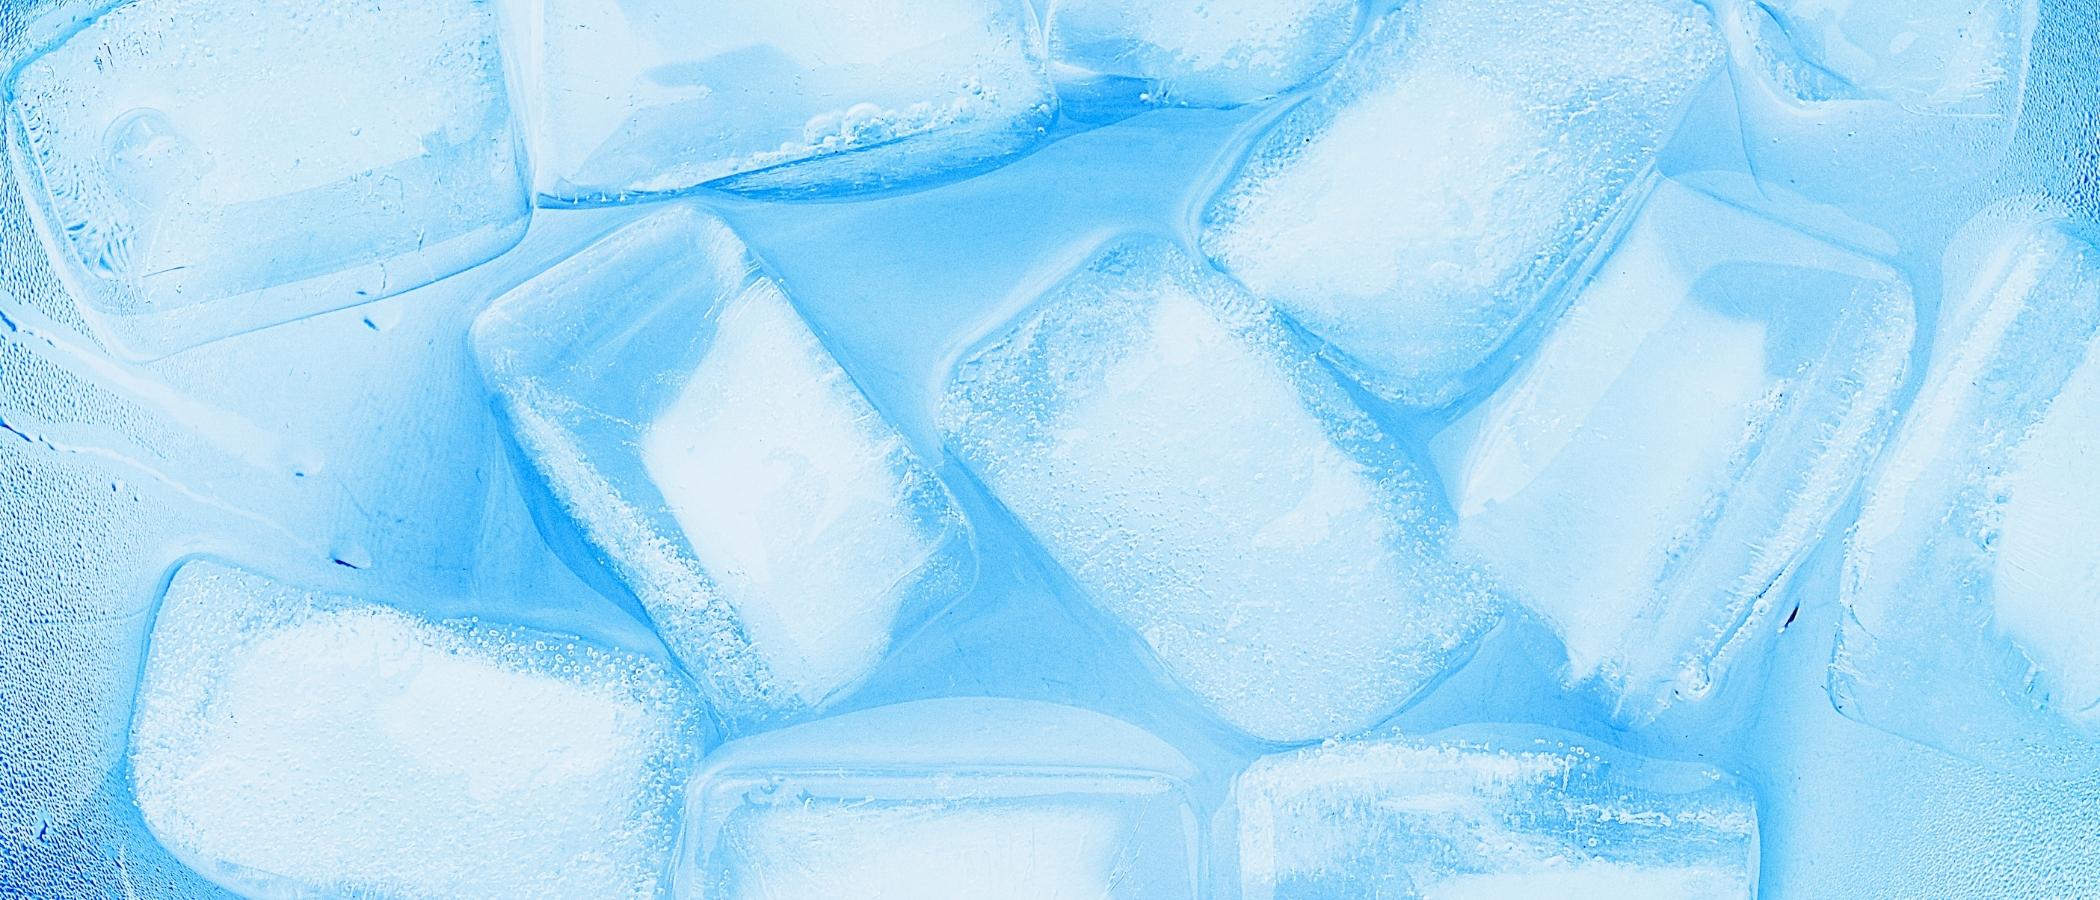 Ice from ice maker tastes like metal